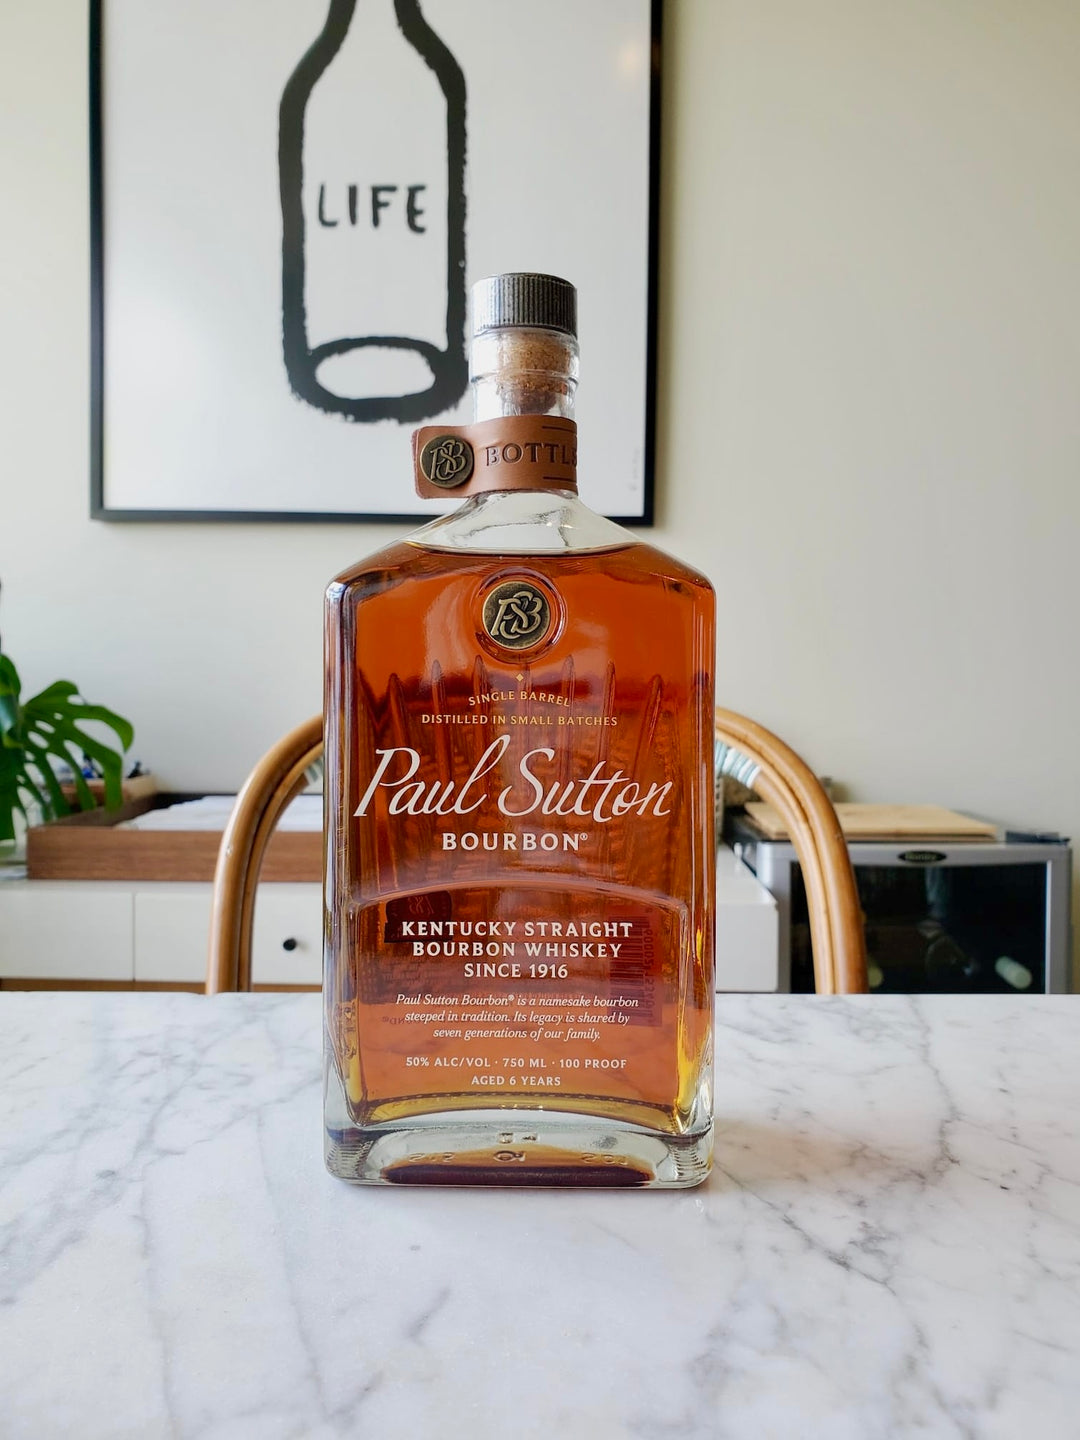 Paul Sutton Single Barrel, Kentucky Straight Bourbon Whiskey, Kentucky